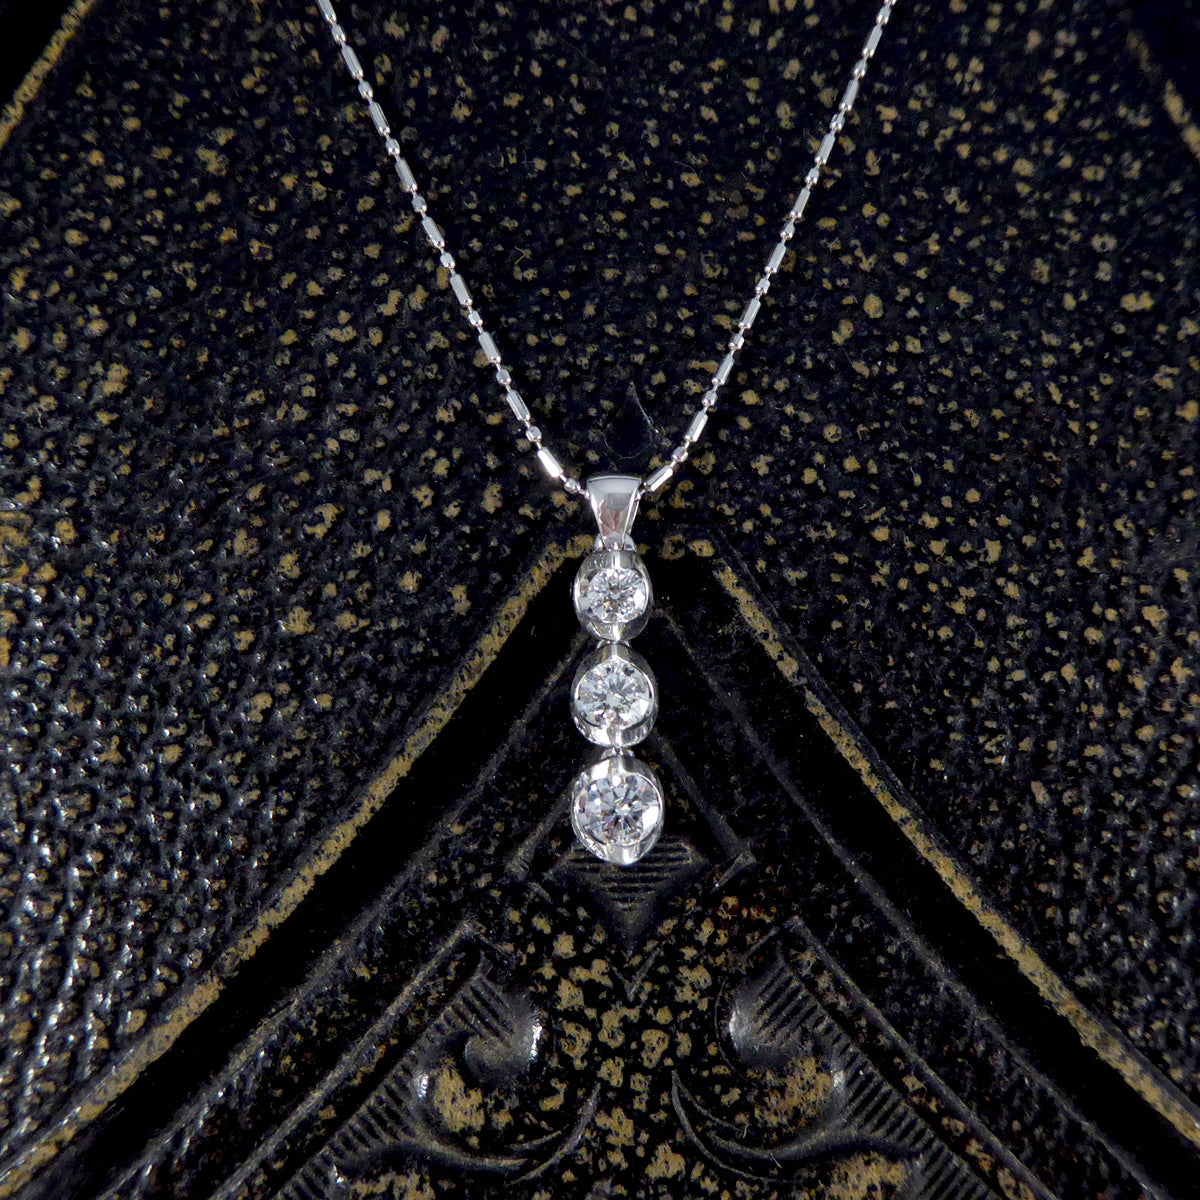 Diamond Graduating Three Stone Drop Pendant Necklace in 18ct White Gold